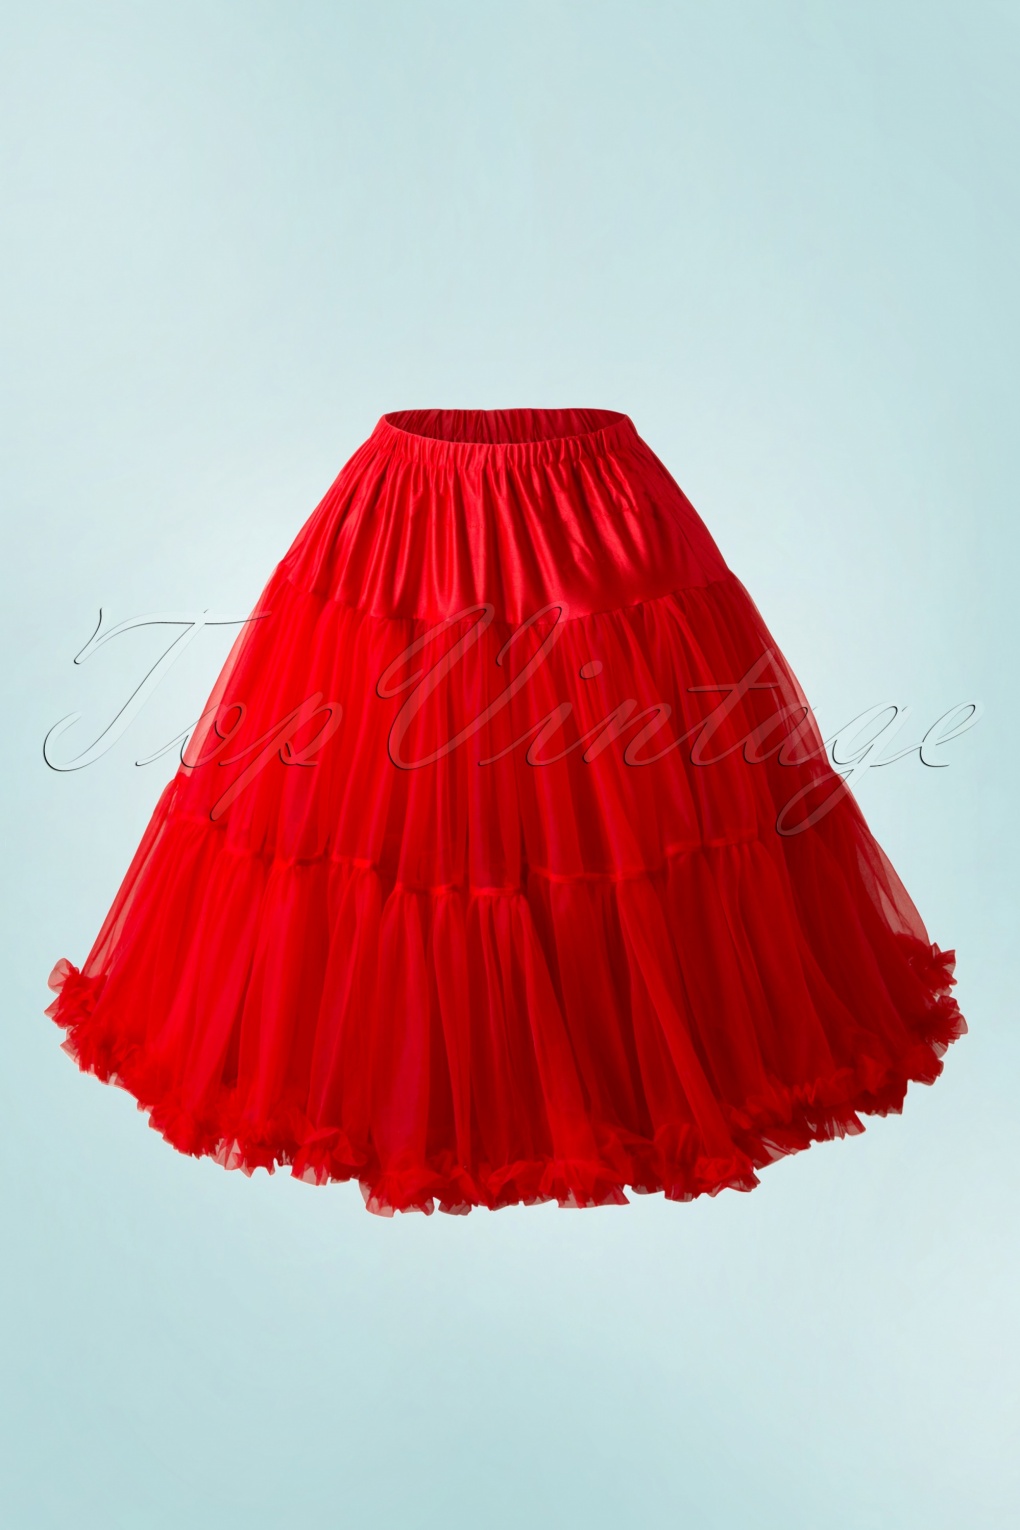 Verknald roman Aannames, aannames. Raad eens 50s Lola Lifeforms Petticoat in Red